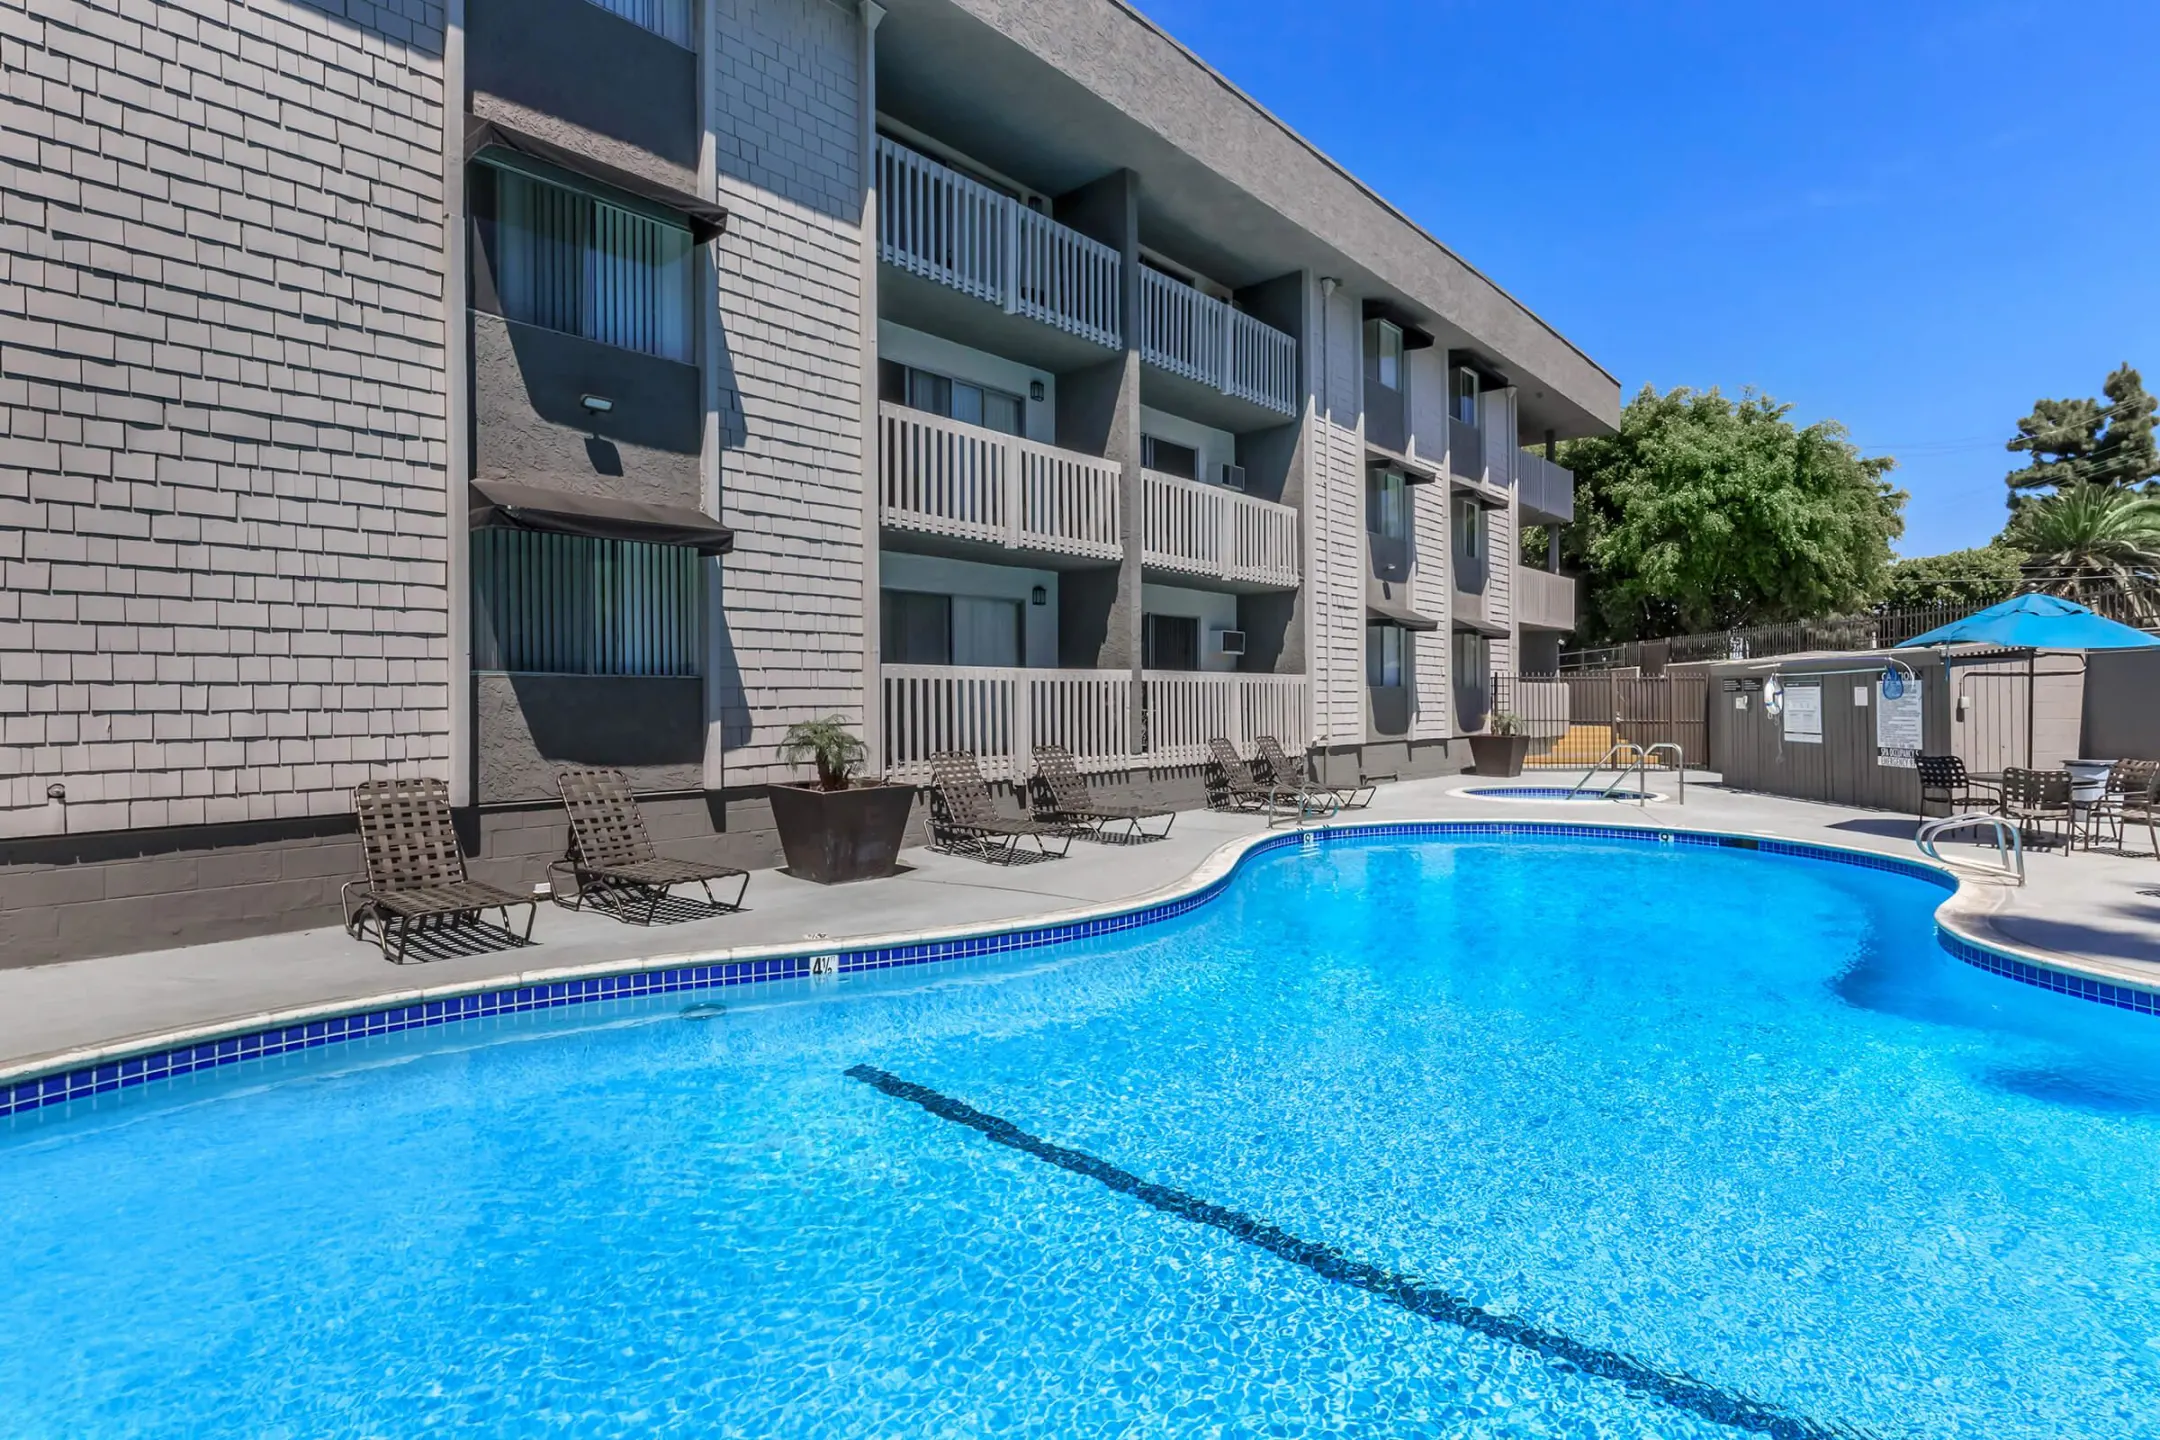 Pool - Pacific View Apartment Homes - Long Beach, CA